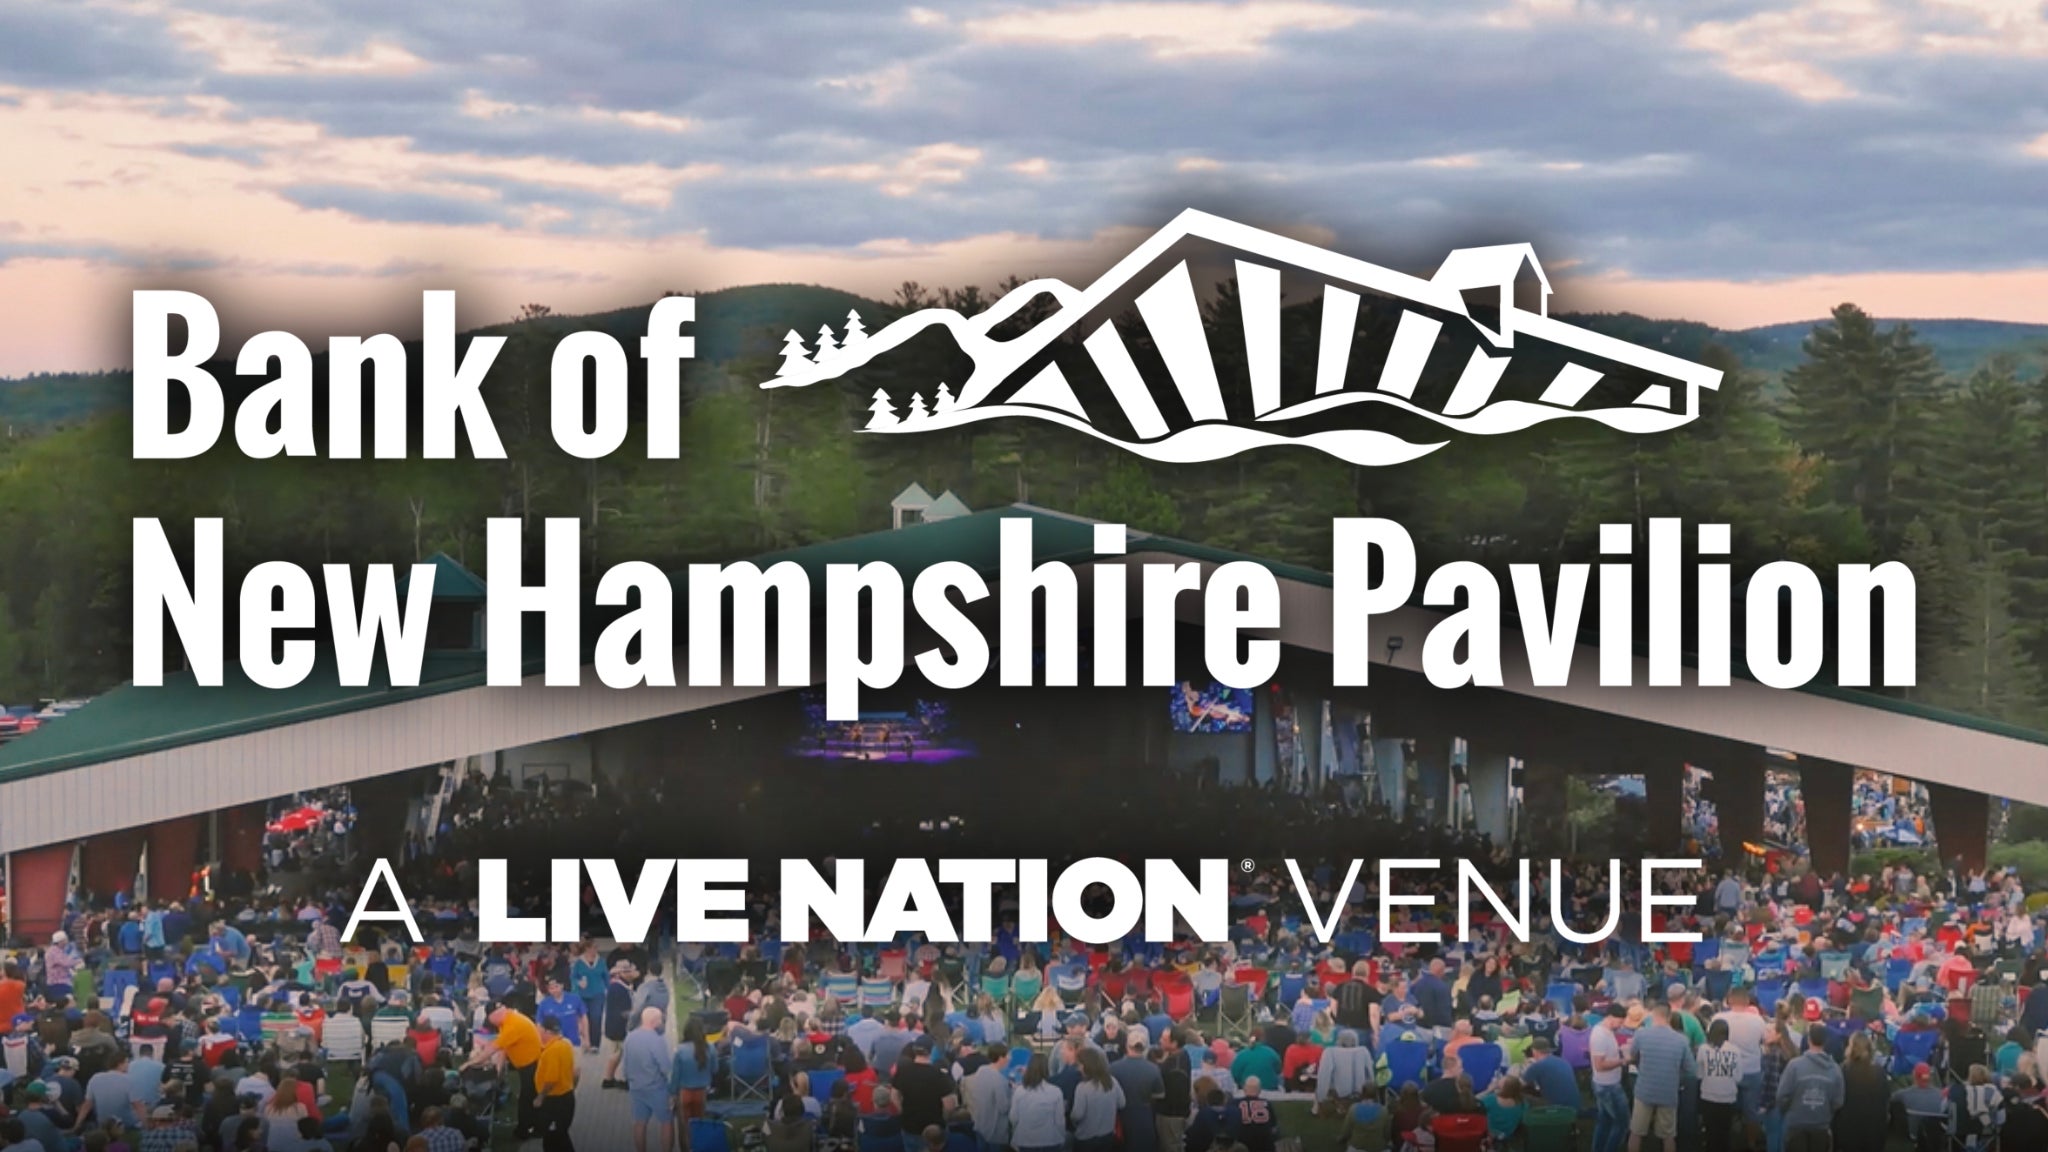 Bank of New Hampshire Pavilion 2020 show schedule & venue information